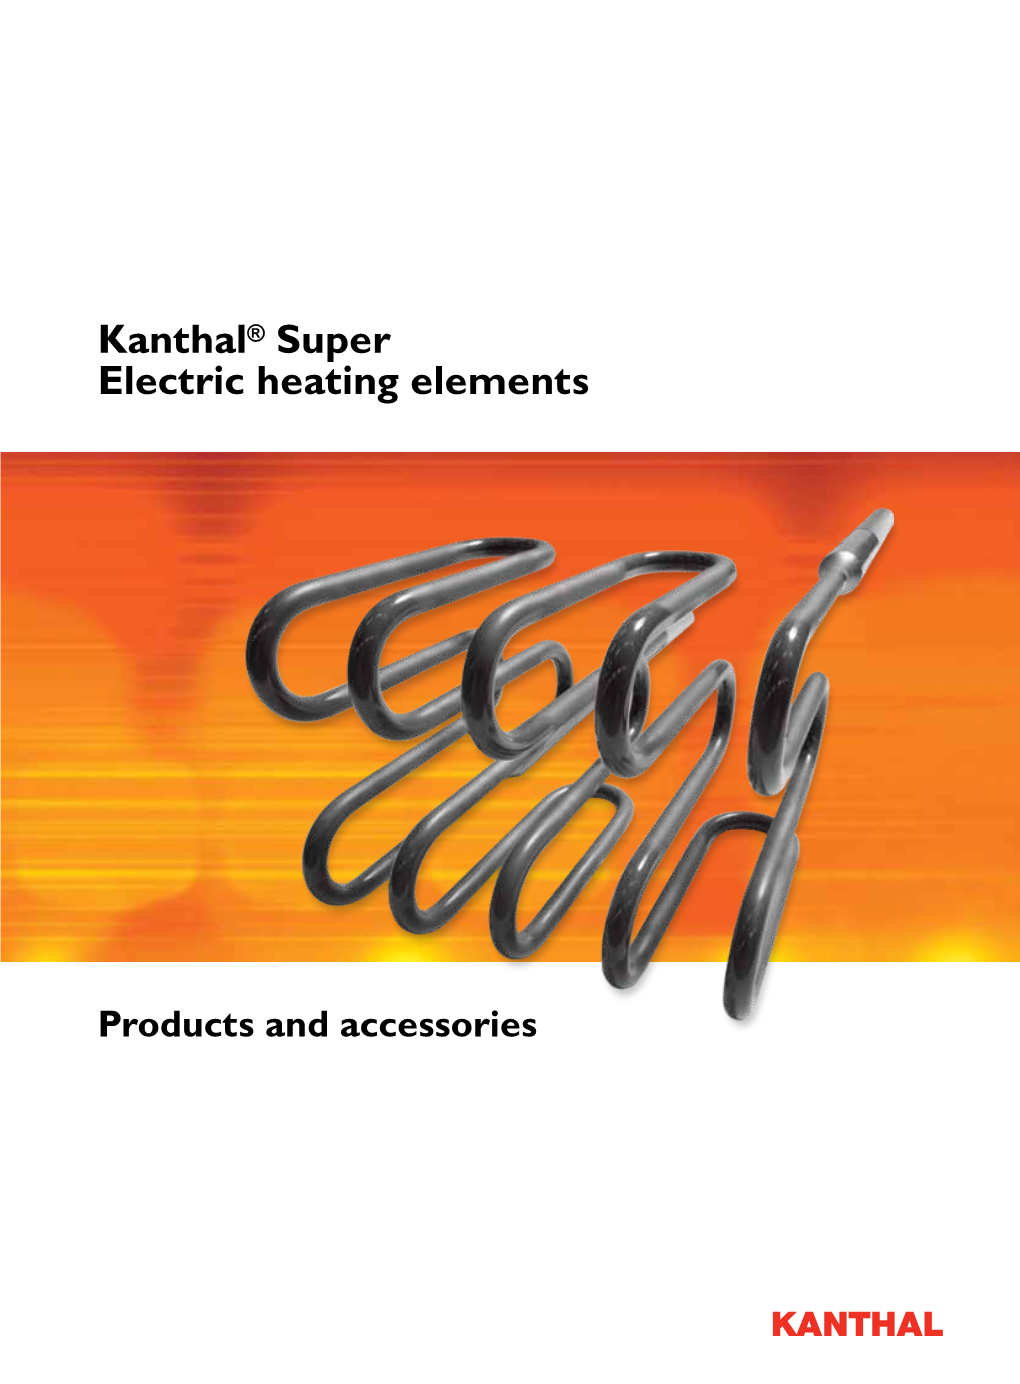 Download Kanthal Super Electric Heating Elements